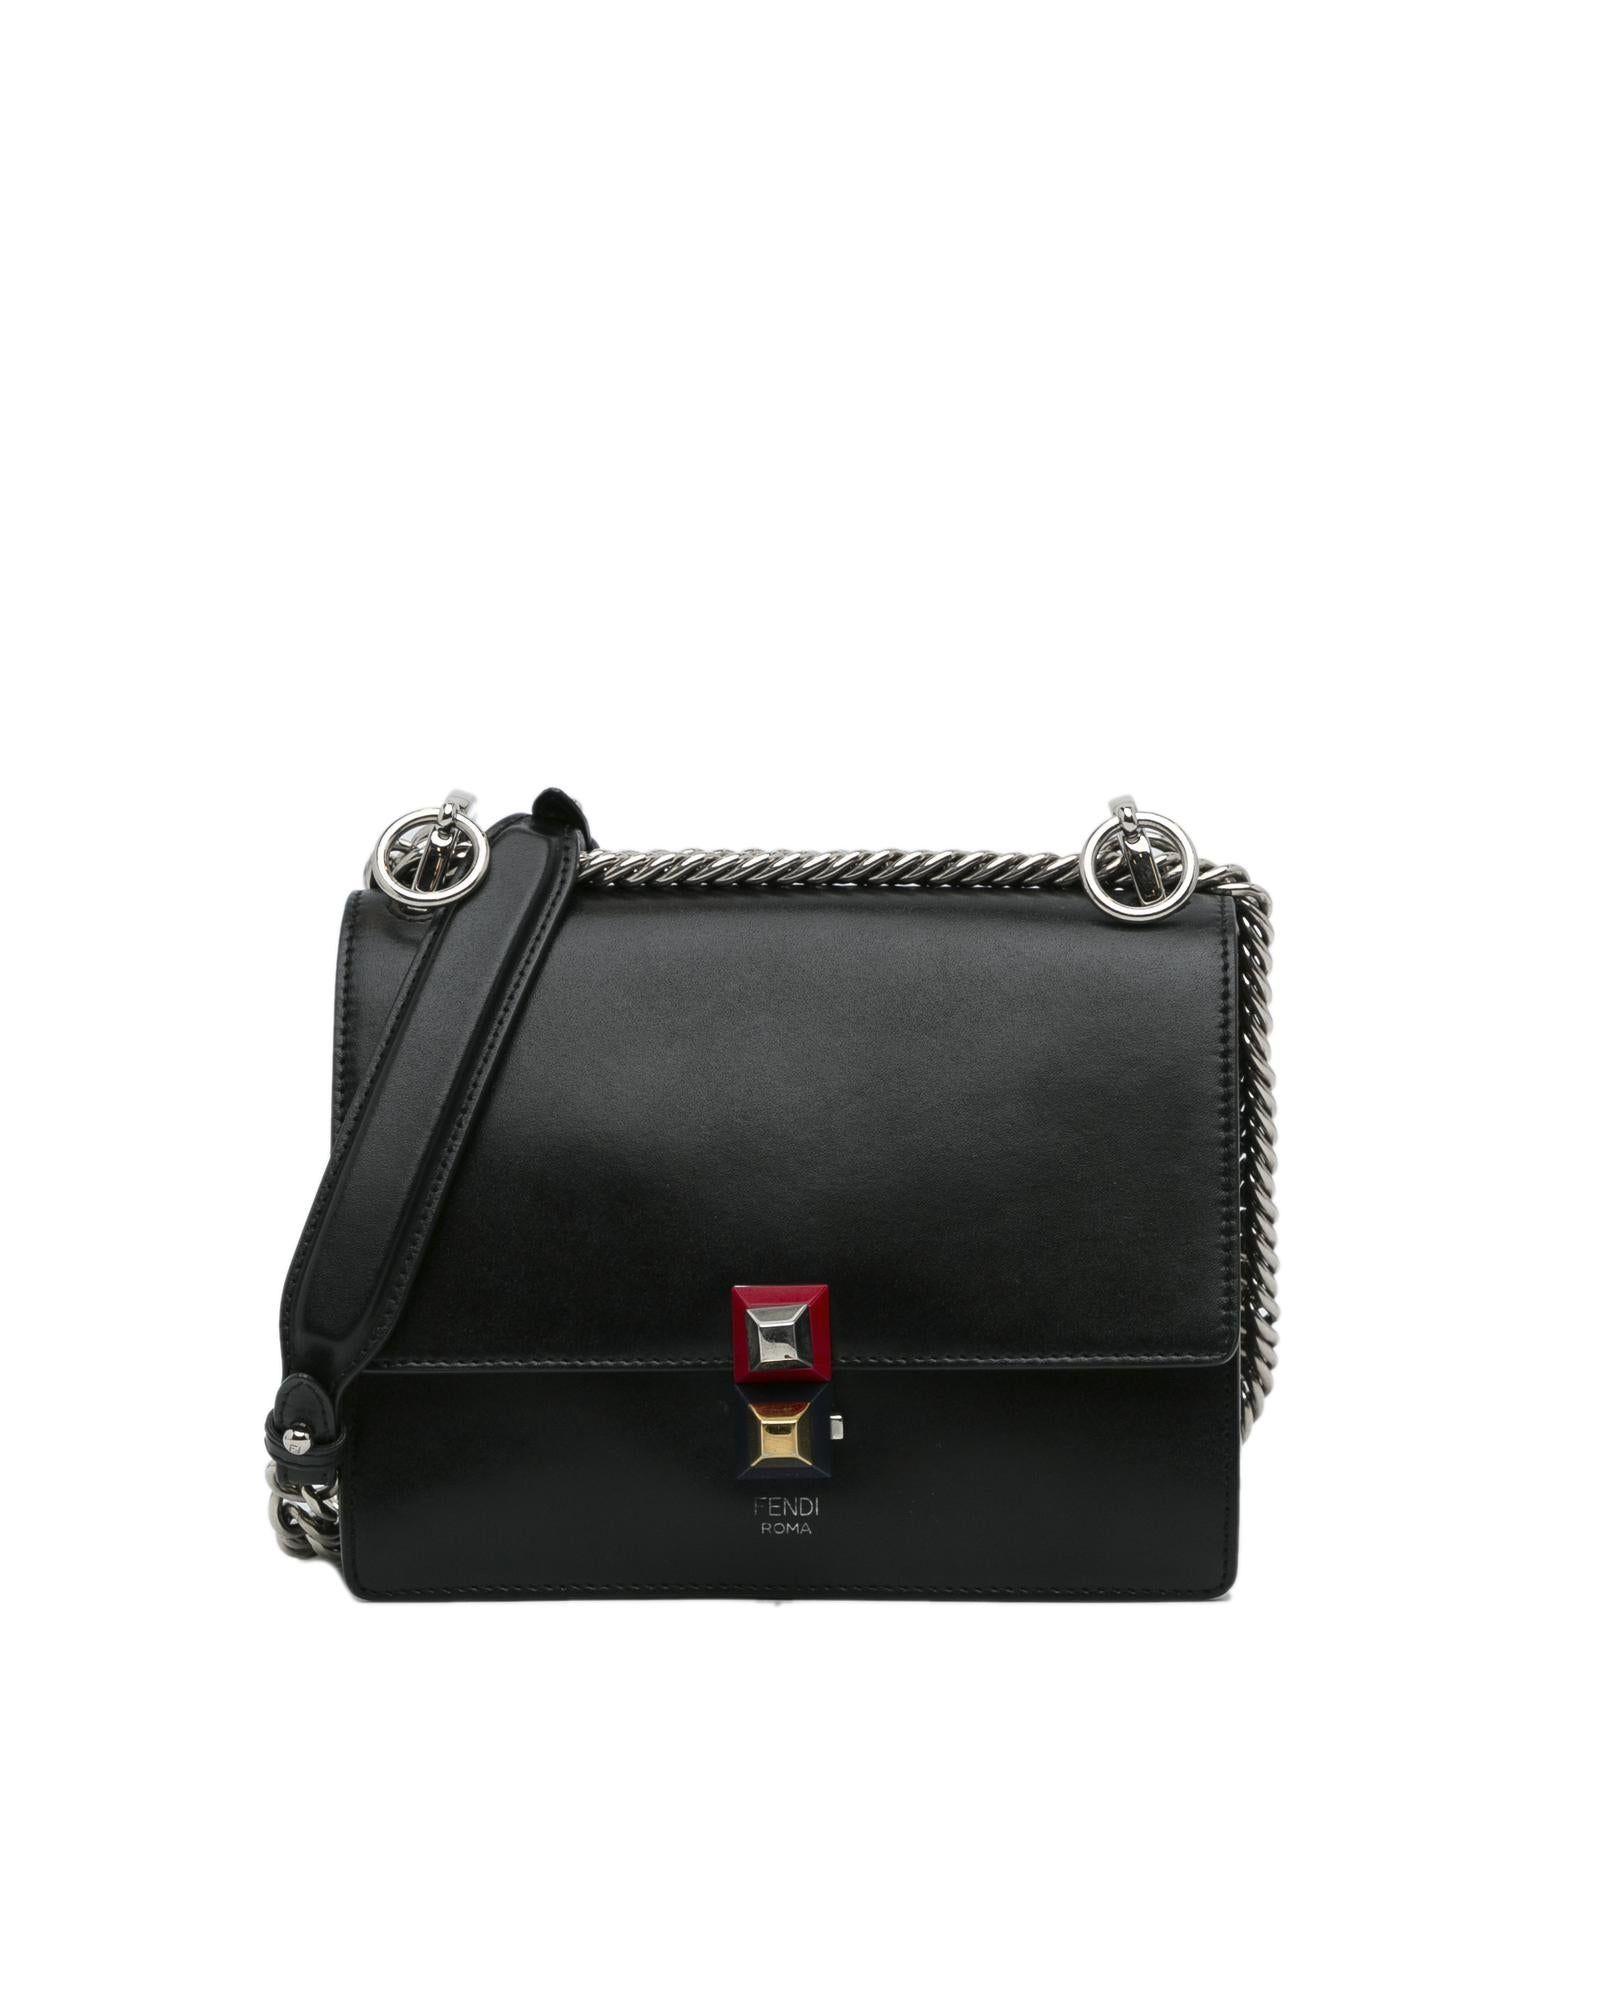 Fendi Leather Crossbody Bag With Chain Strap in Black | Lyst